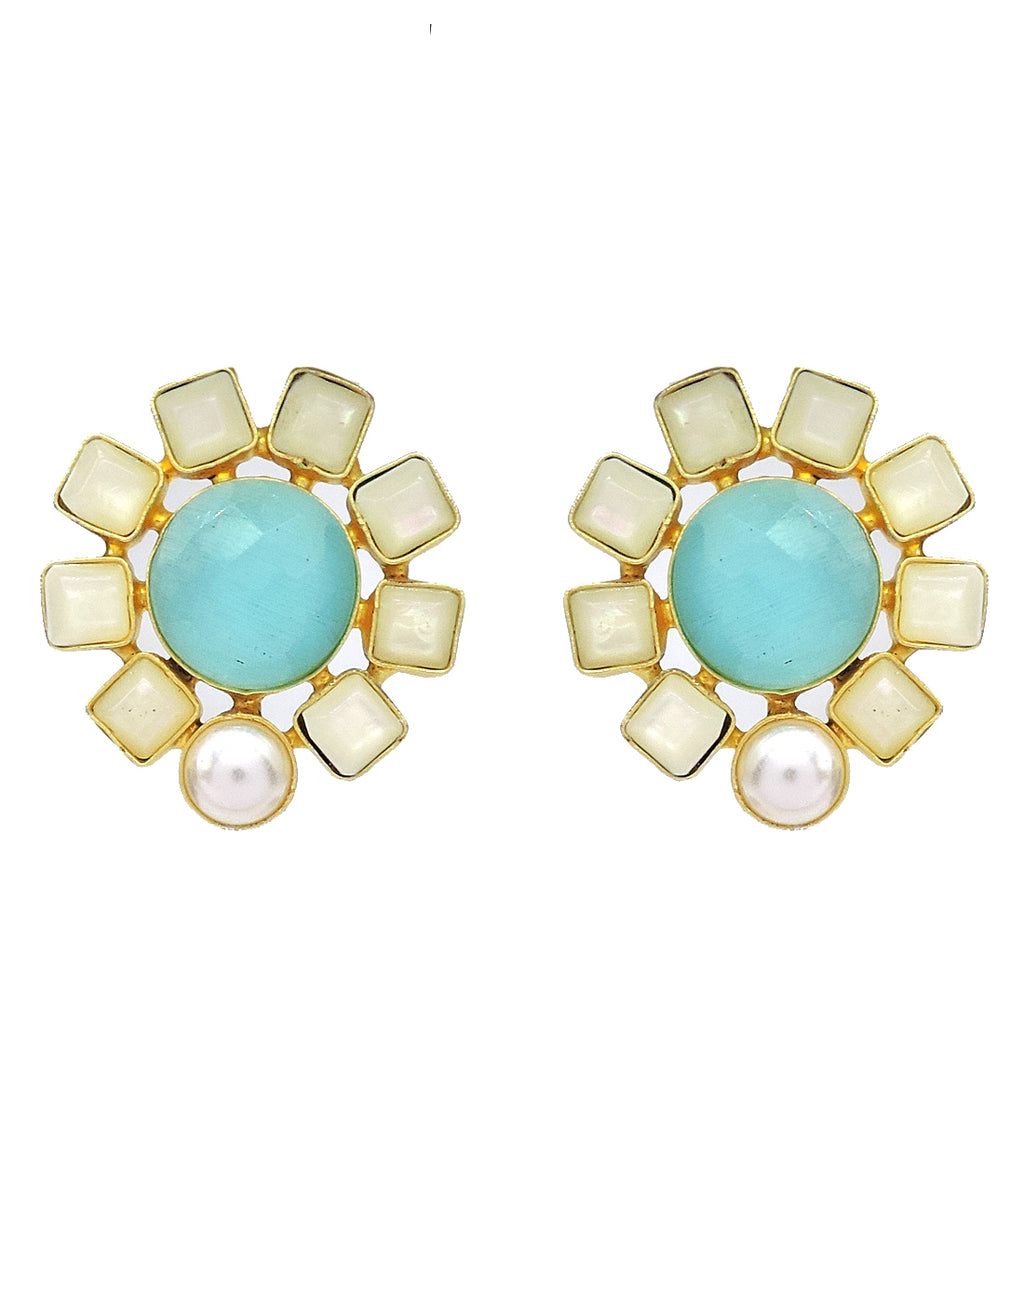 Blue & White Flower Earrings - Statement Earrings - Gold-Plated & Hypoallergenic Jewellery - Made in India - Dubai Jewellery - Dori